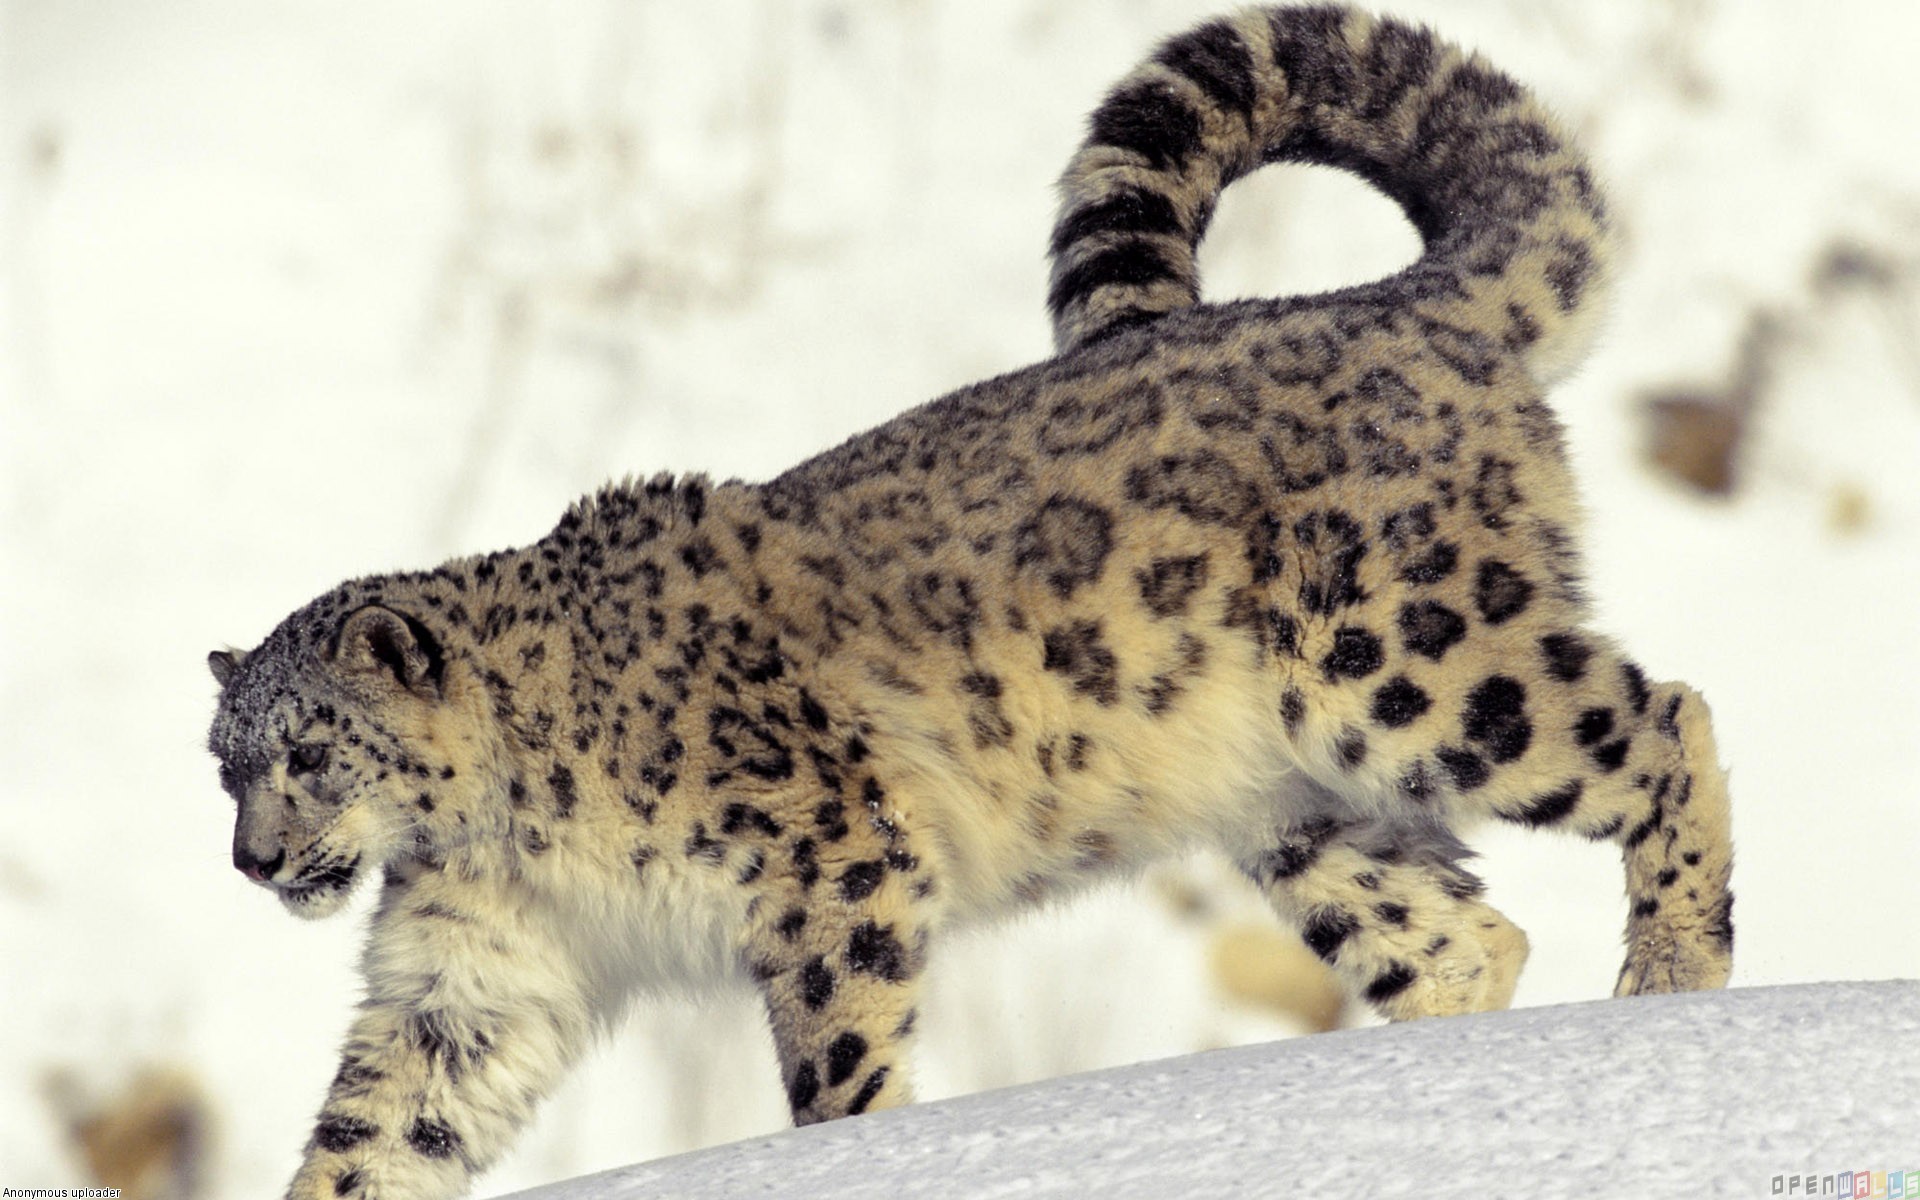  reptiles hdwallpapersfor animals animal snow leopard image